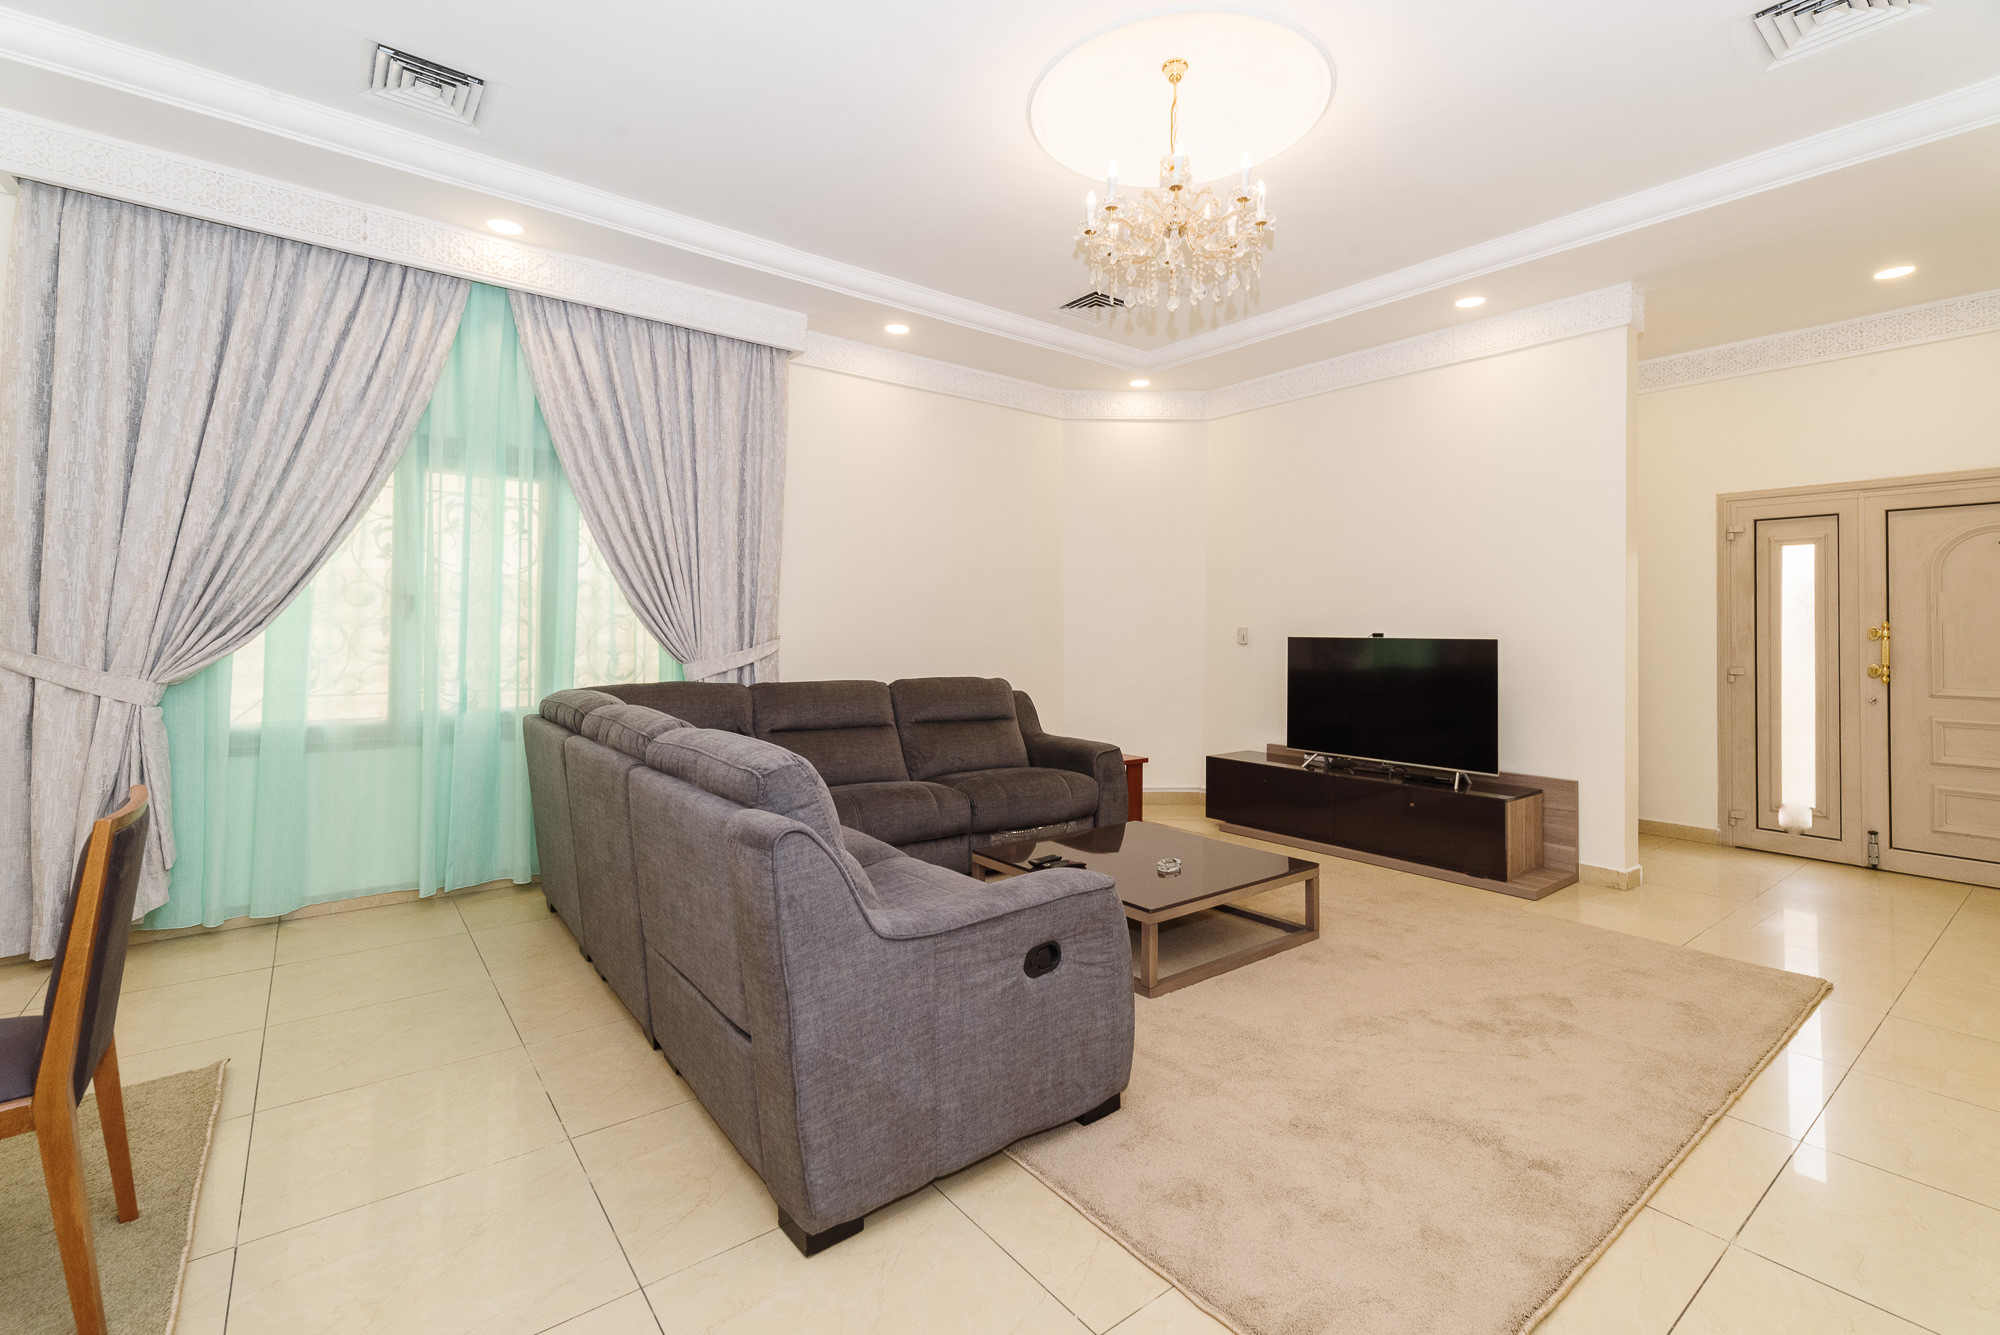 Salwa – spacious, furnished three bedroom ground floor apartment